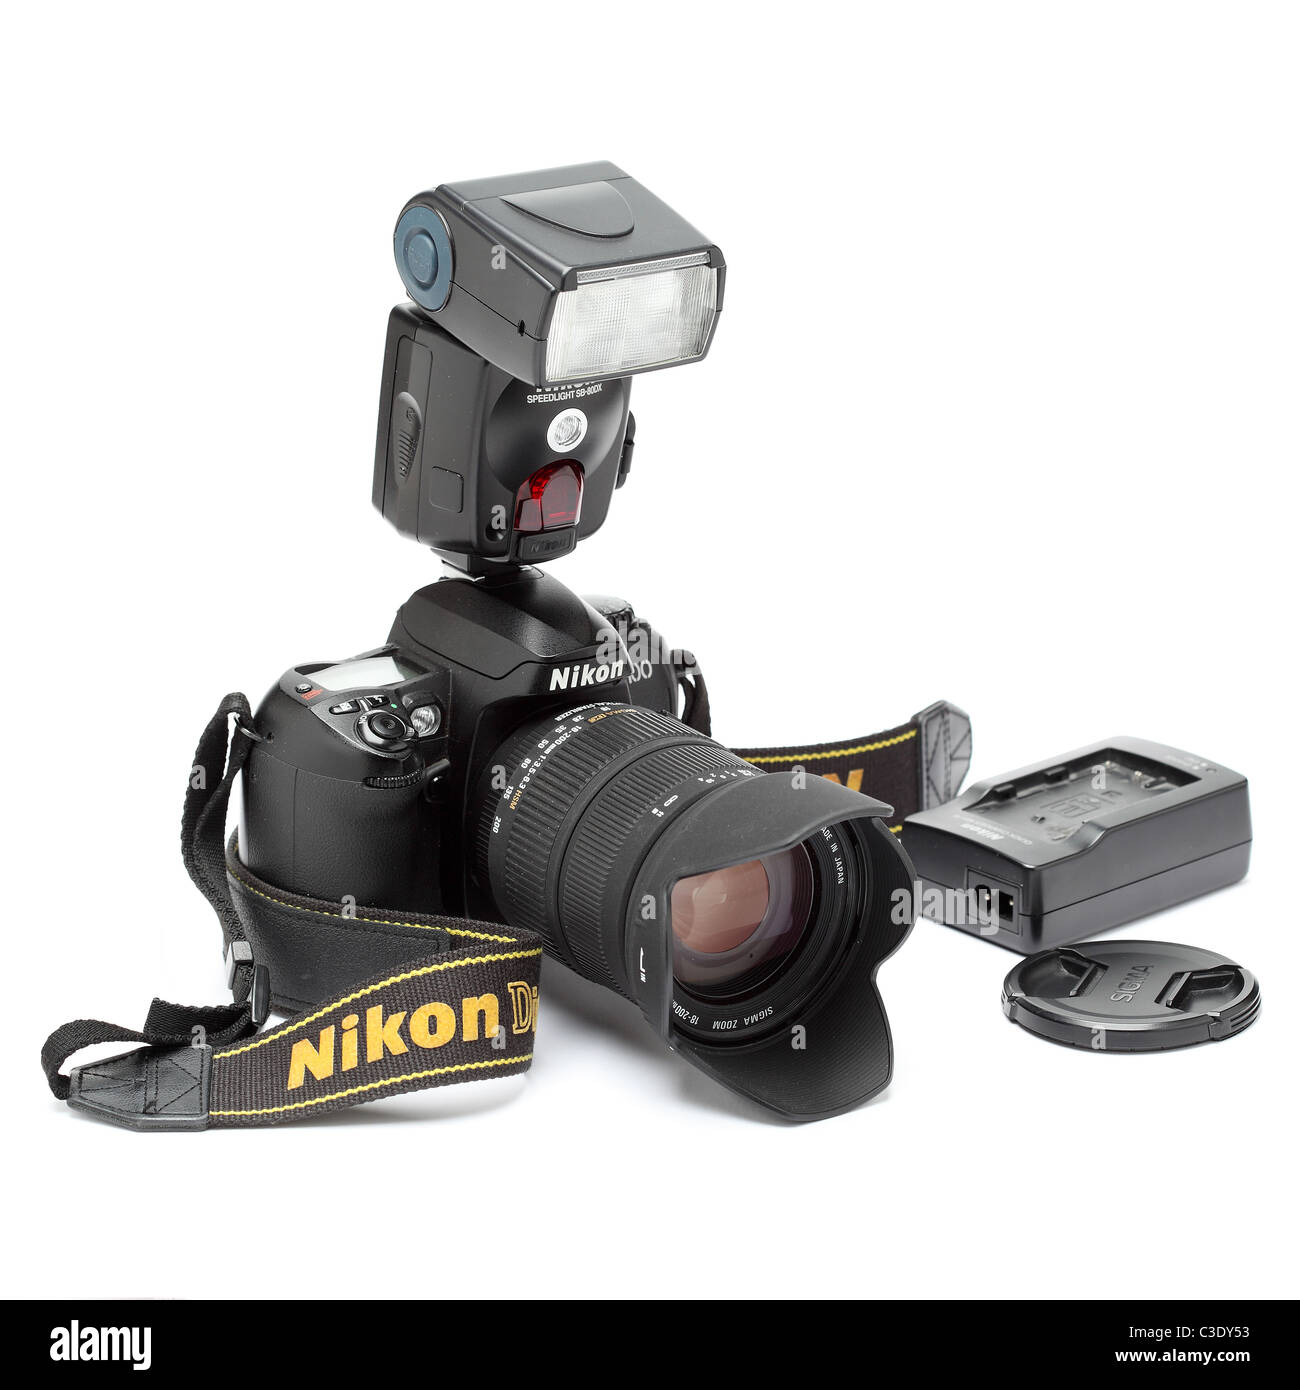 Nikon dslr flash camera Stock Photo